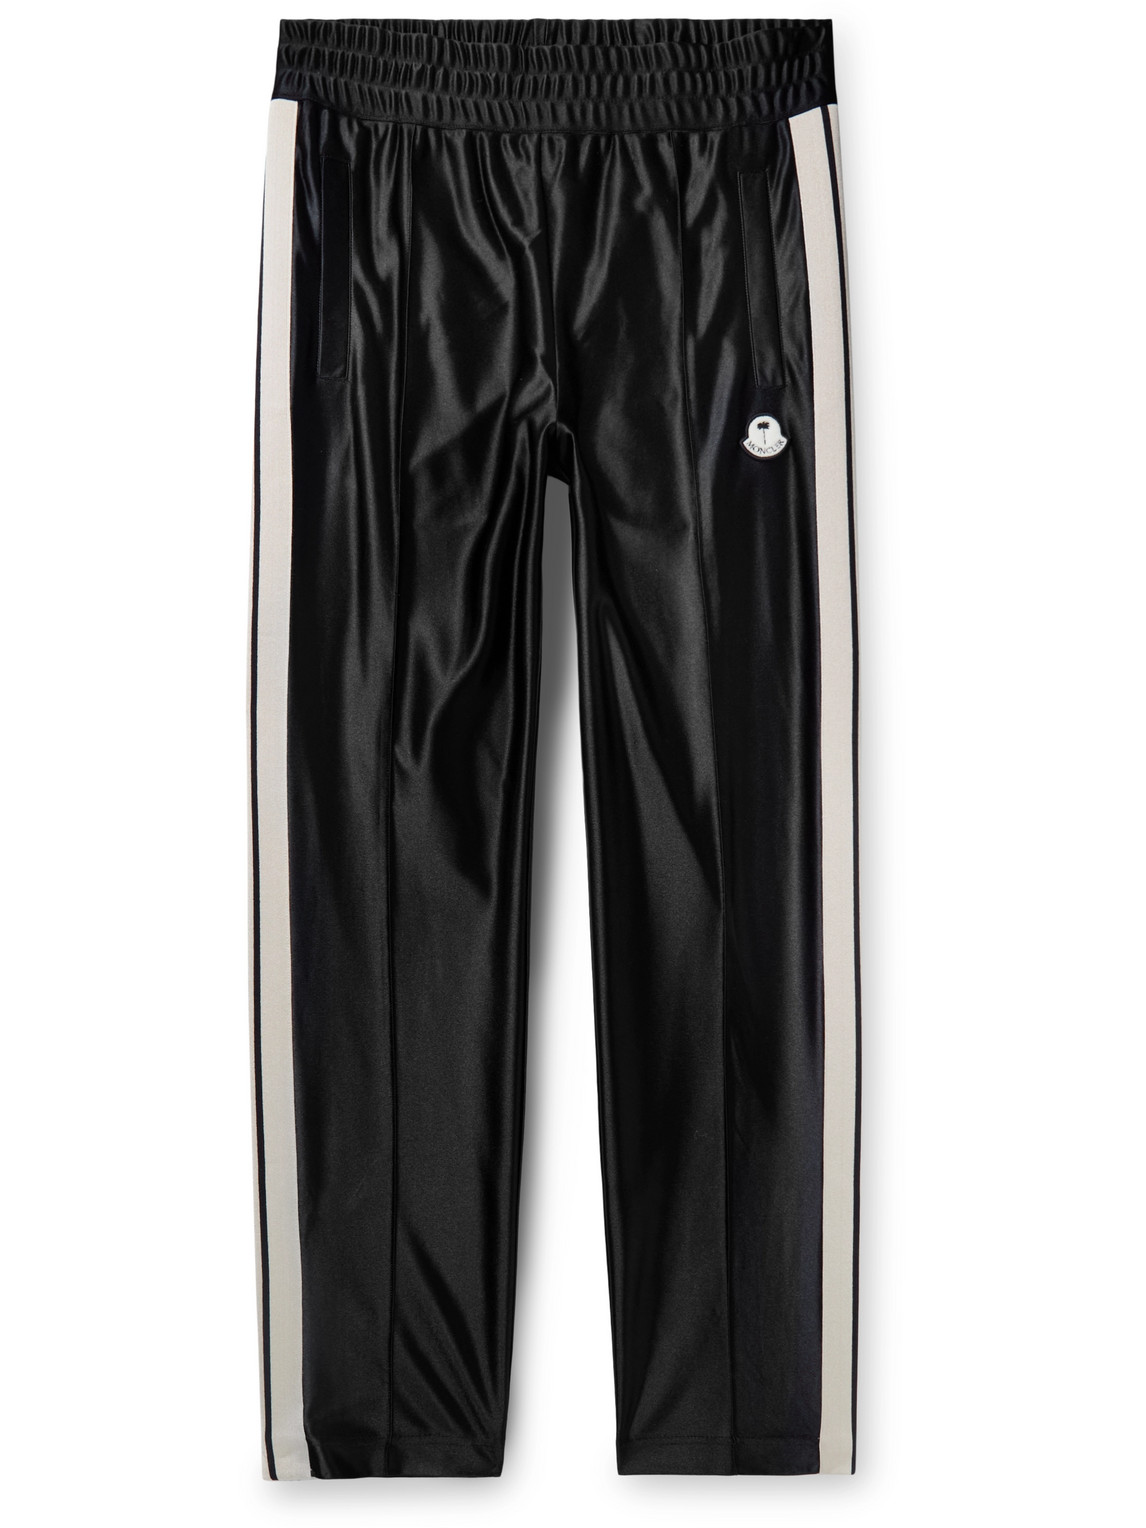 Moncler Genius Palm Angels Straight-Leg Striped Jersey Sweatpants